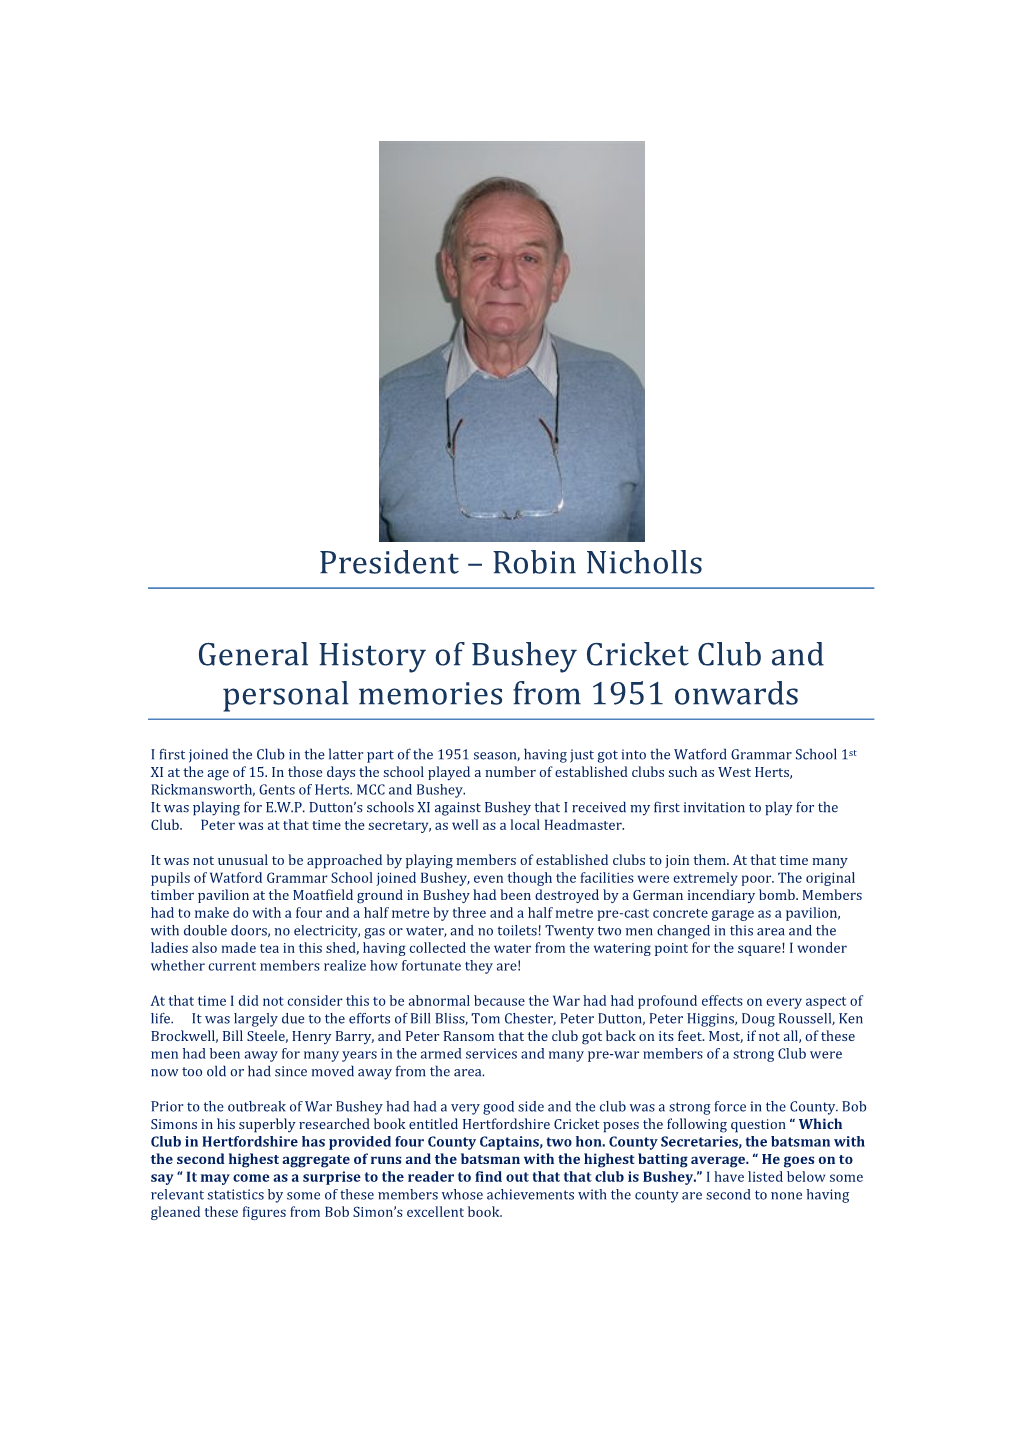 President – Robin Nicholls General History of Bushey Cricket Club And